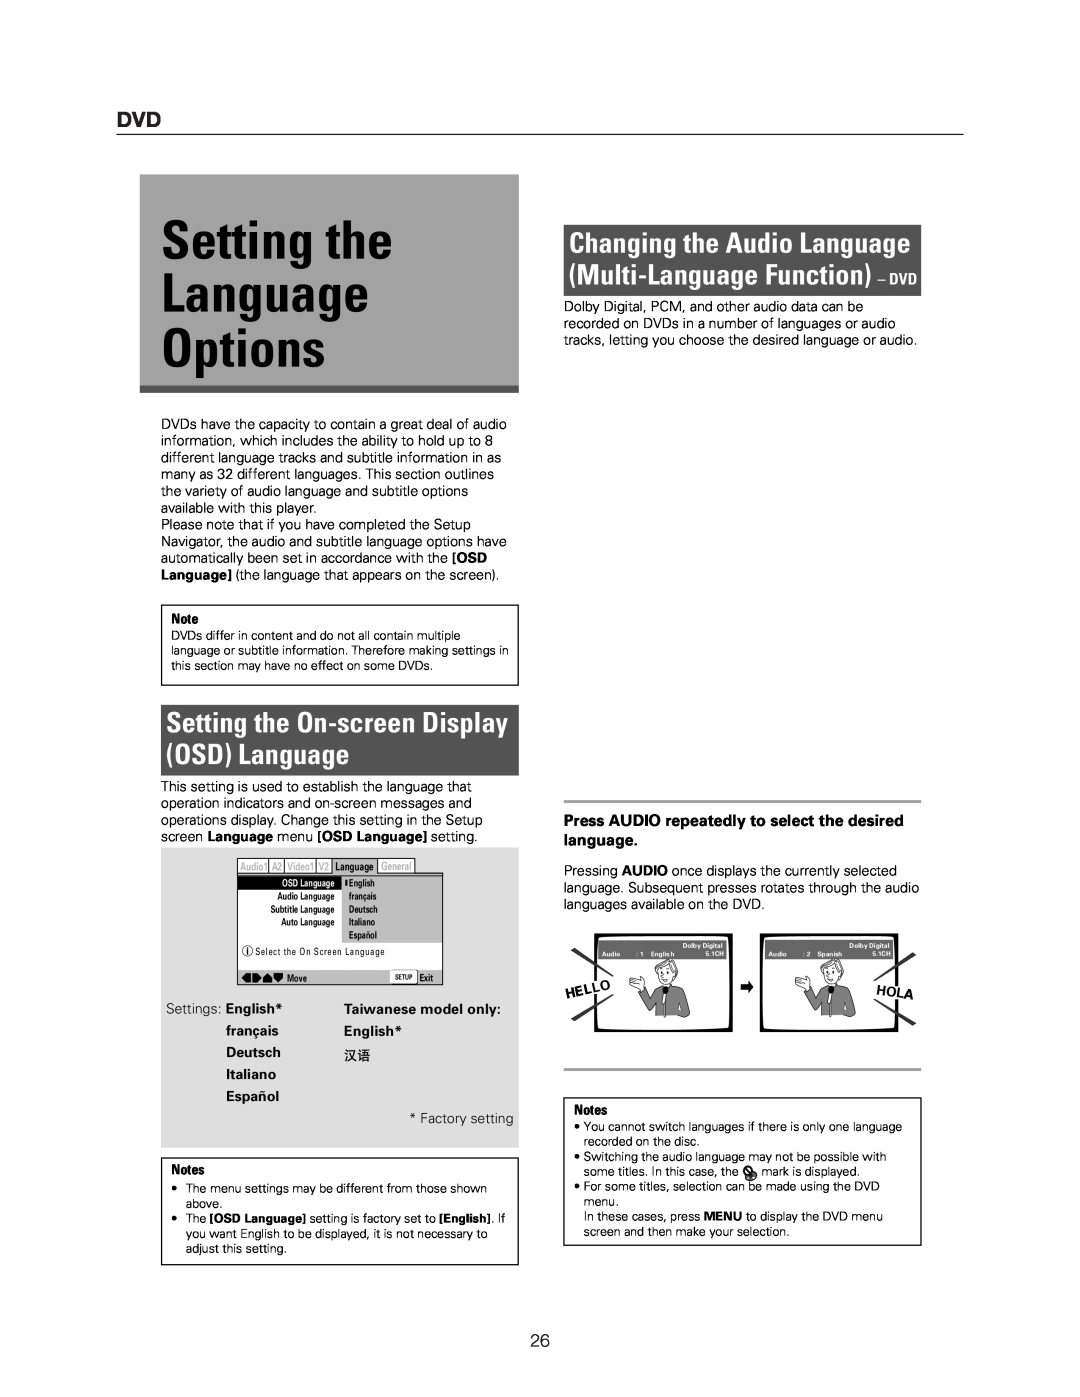 Meridian Audio DVP1500 manual Setting the Language Options, Changing the Audio Language Multi-Language Function - DVD 